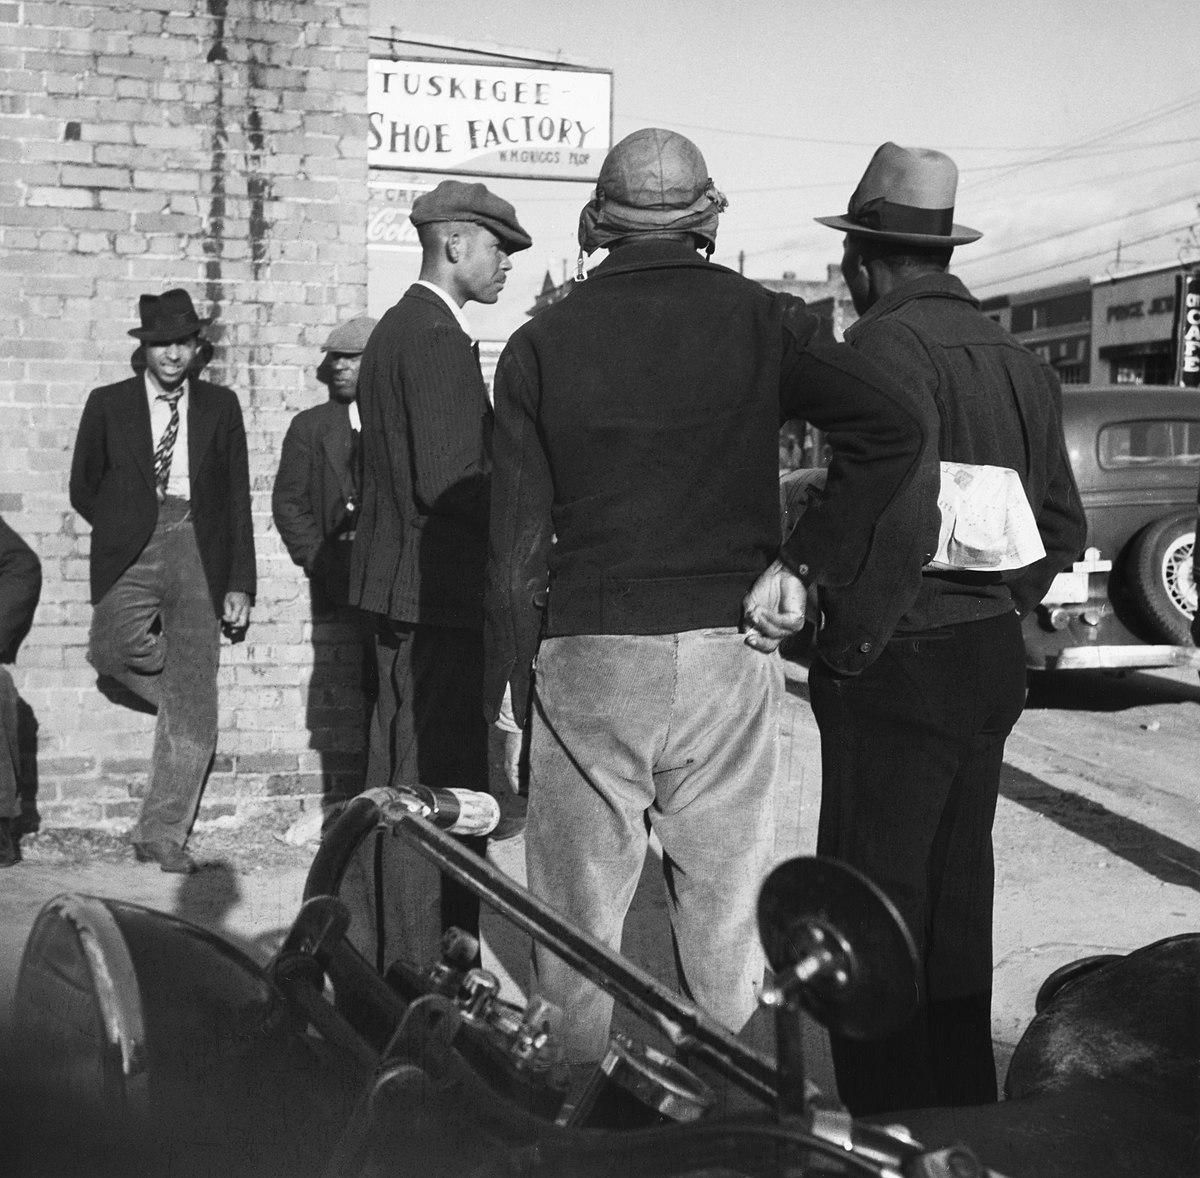 Deutsch: USA, Tuskegee/AL: Menschen; Männer wartend neben einem Gebäude mit der Anschrift Shoe FactoryEnglish: USA, Tuskegee/AL: People; Men waiting beside a building with the address "Shoe Factory"